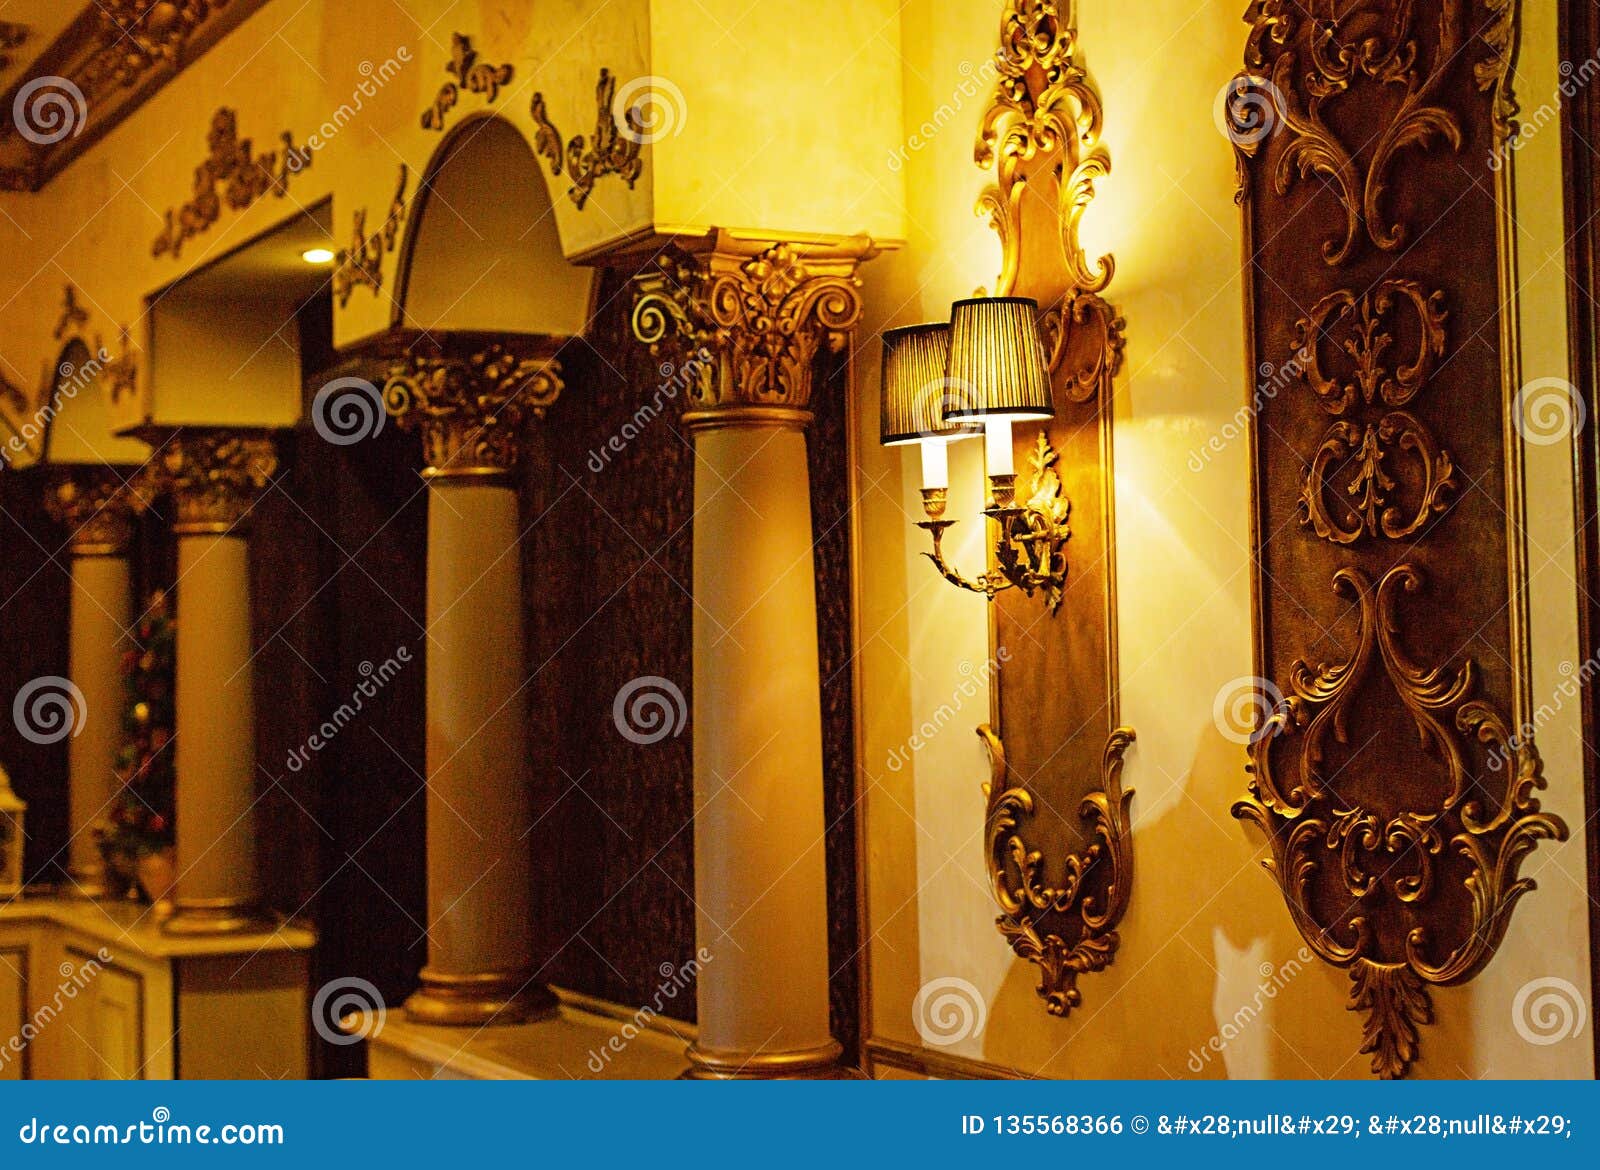 Cozy Restaurant Interior In Golden Color Stock Photo Image